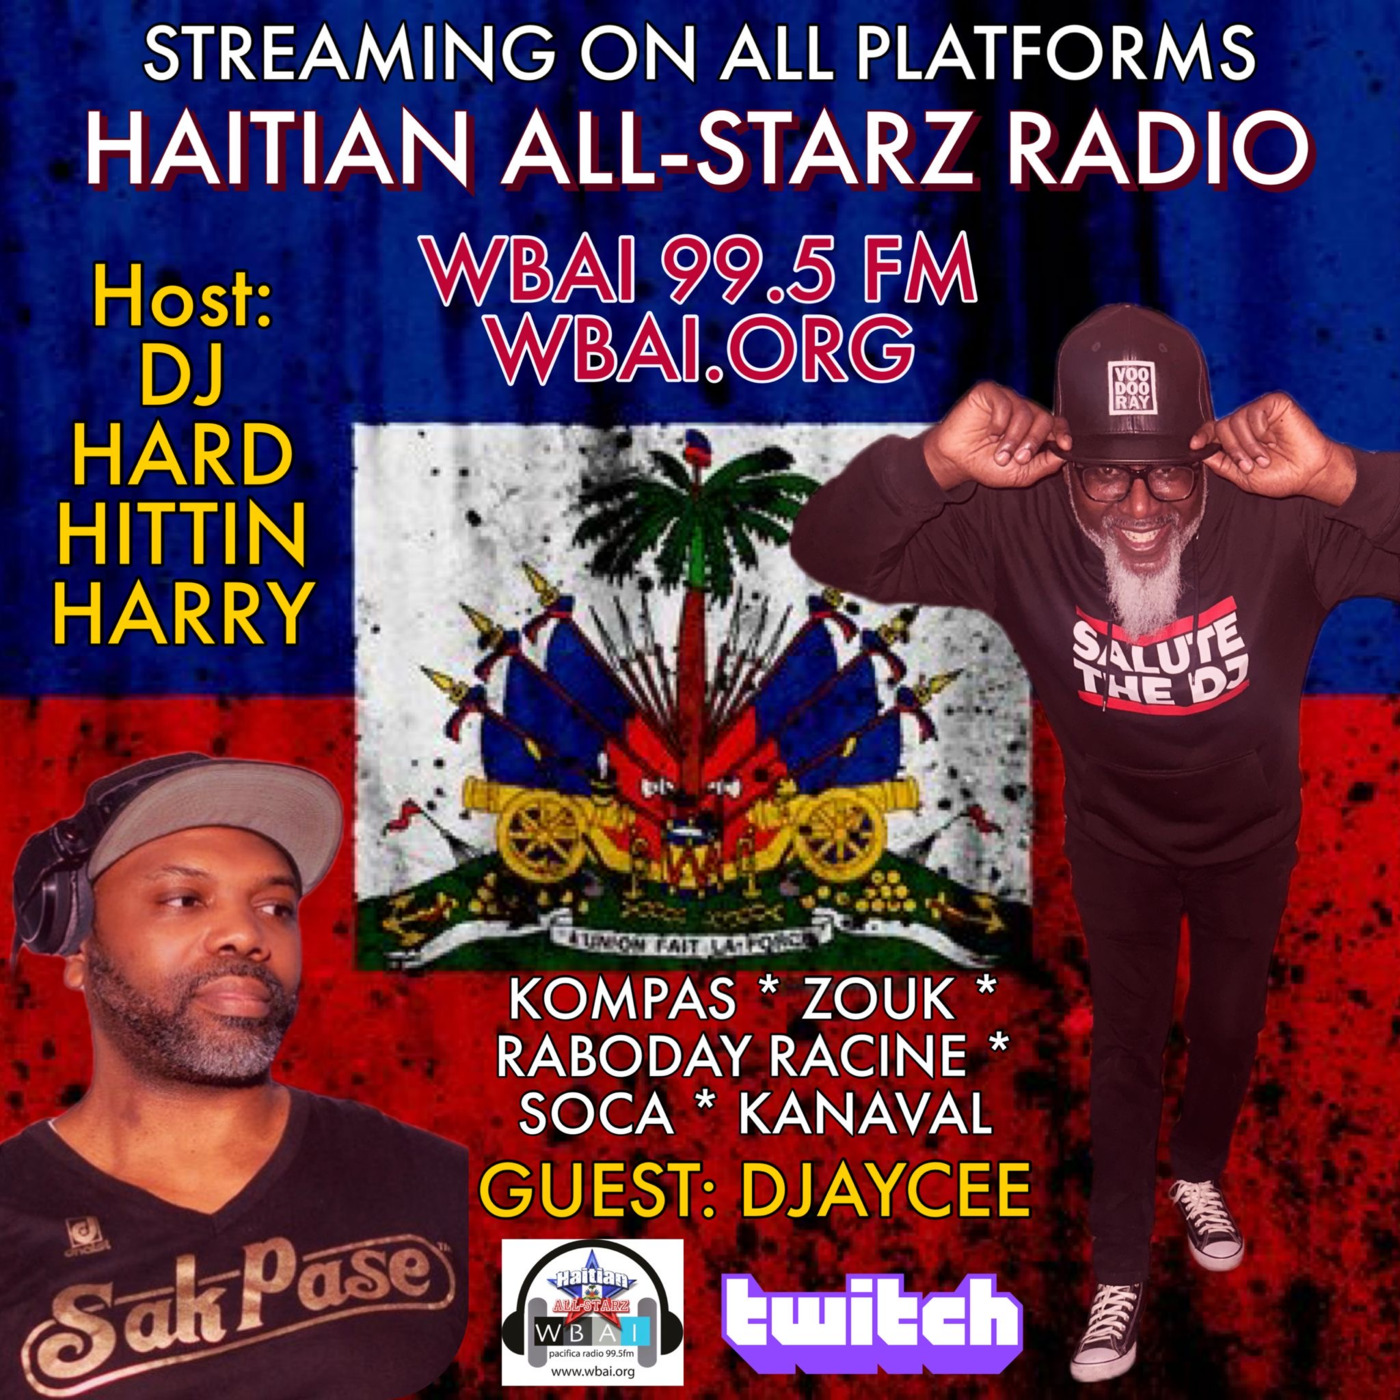 Episode 7: HAITIAN ALL-STARZ RADIO - WBAI 99.5 FM - EPISODE #229 - HARD HITTIN HARRY & DJayCee